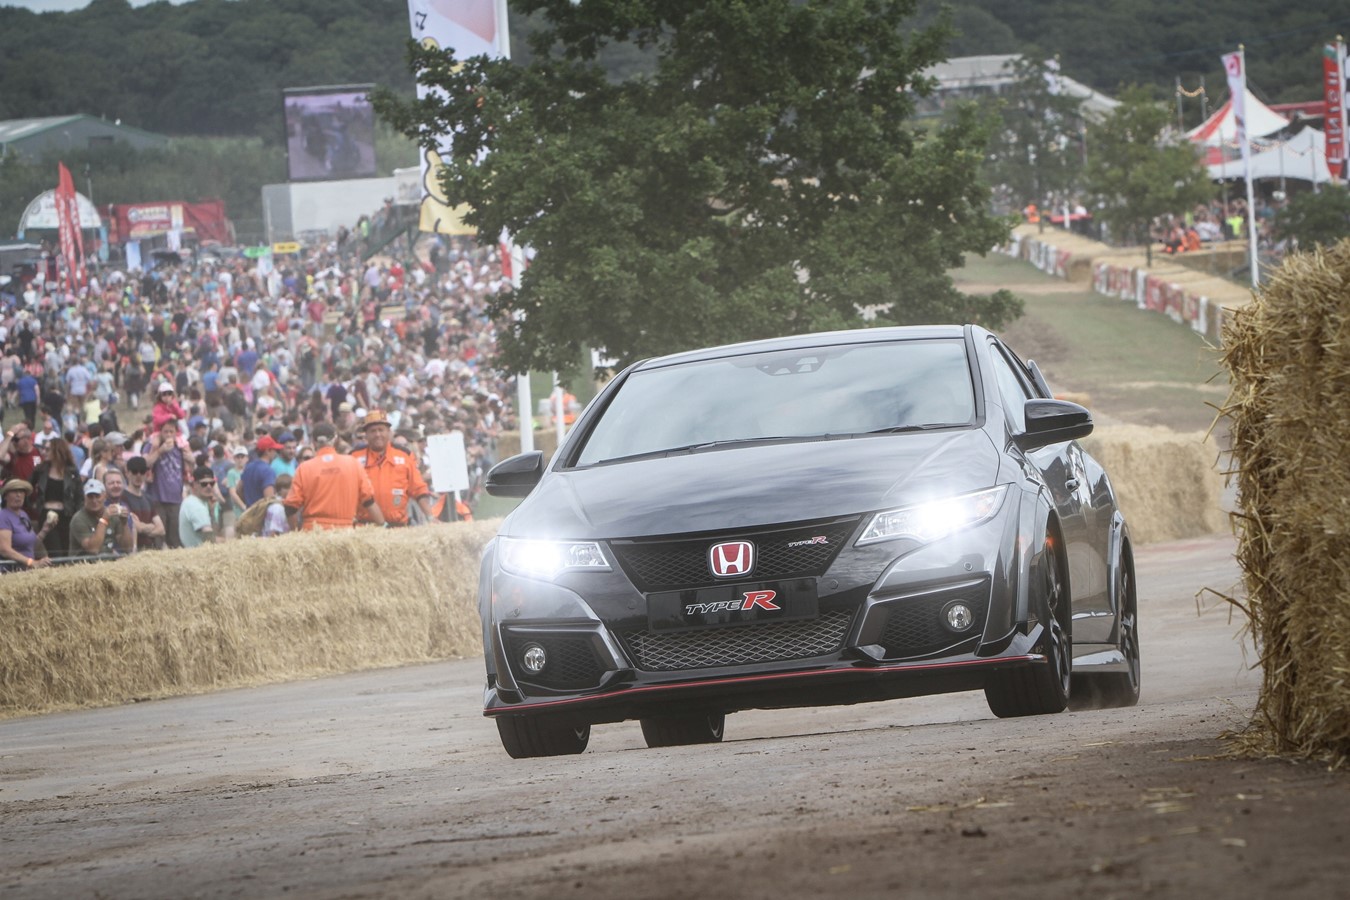 Honda at CarFest 2015